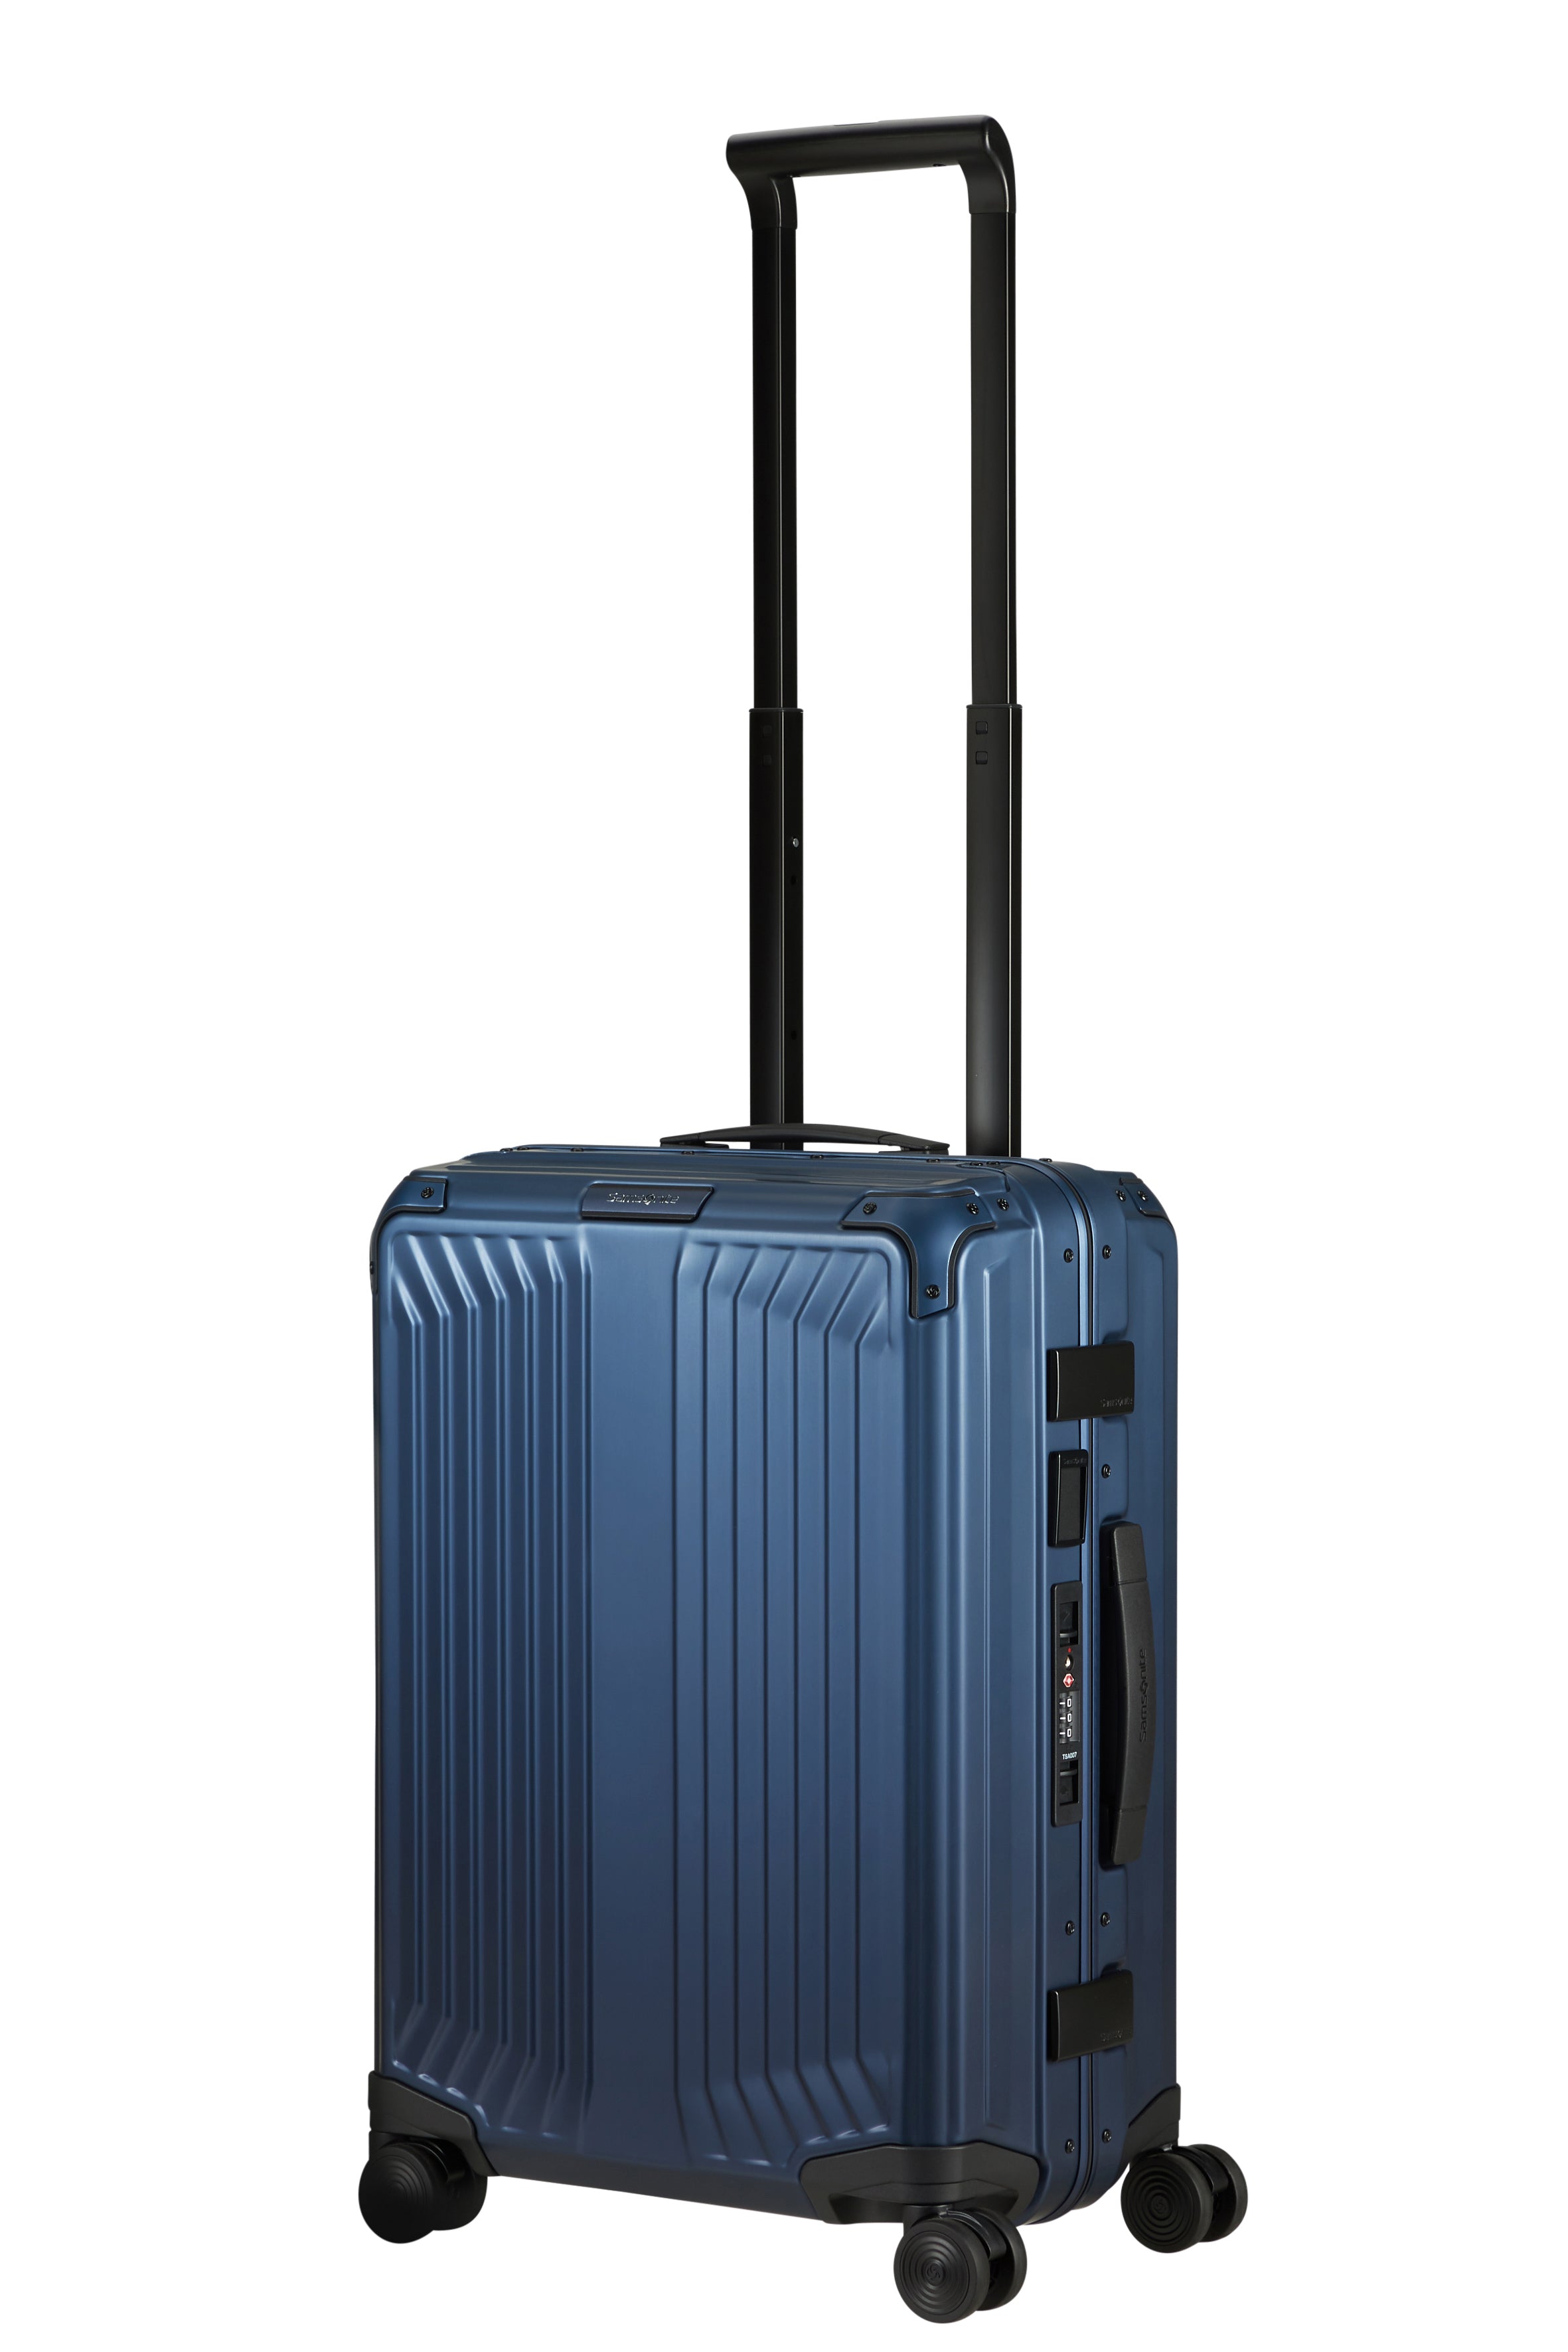 Samsonite - Lite Box ALU 55cm Small 4 Wheel Hard Suitcase - Gradient Midnight - 0